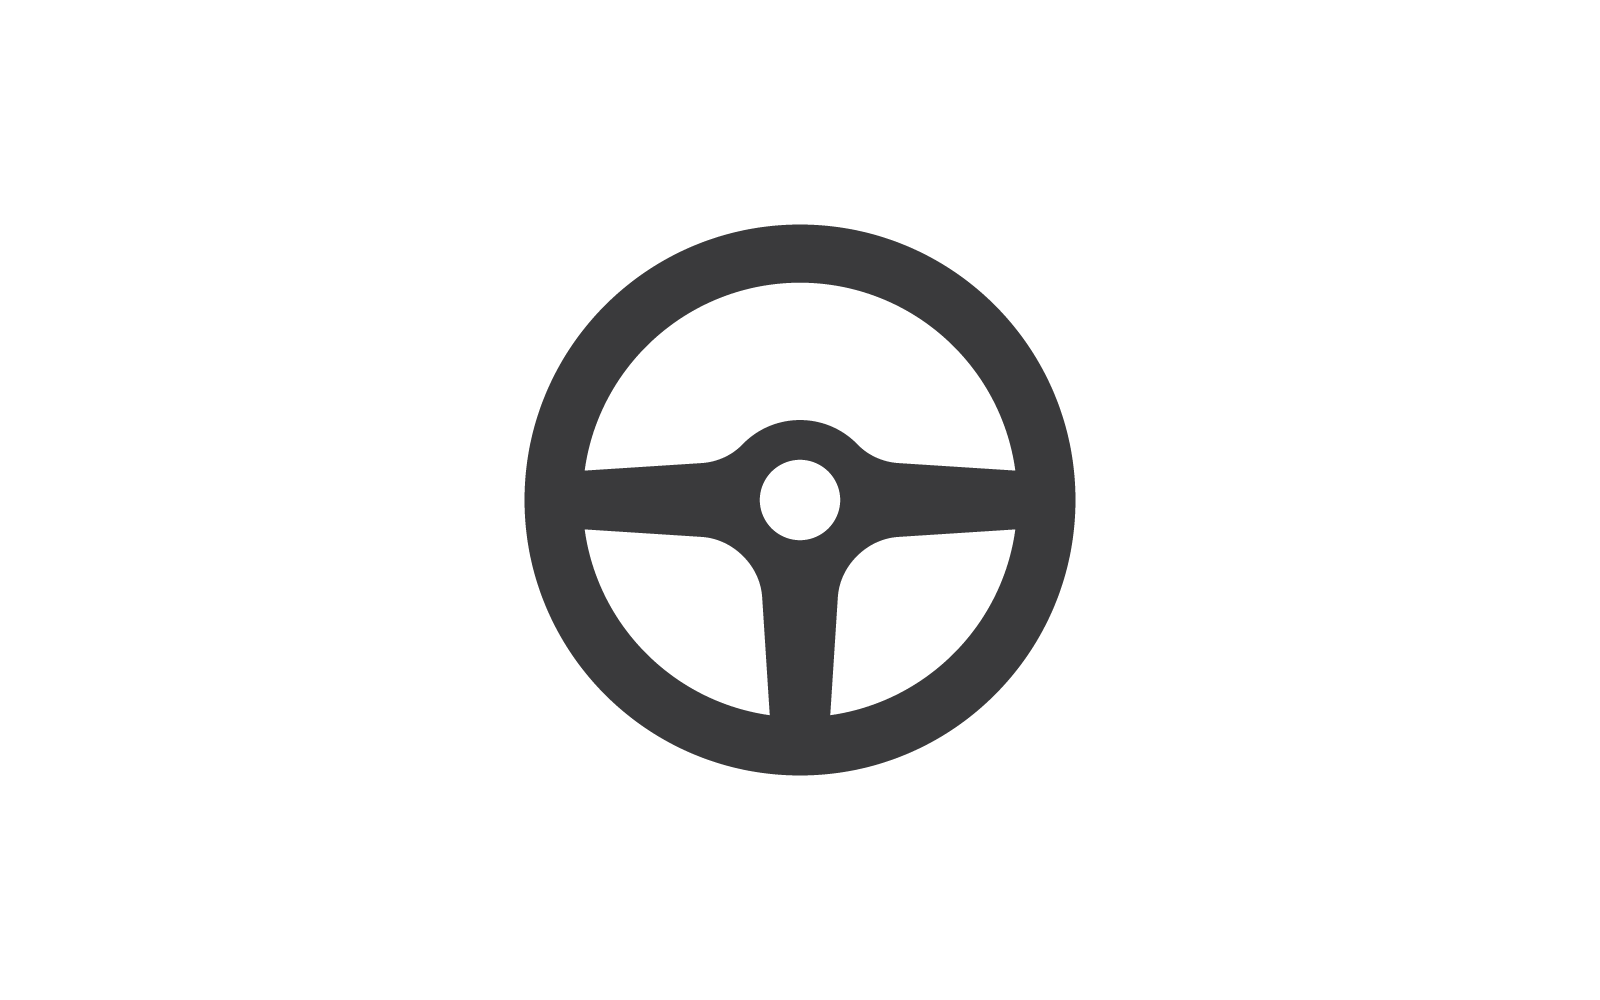 Steering wheel illustration logo icon vector flat design